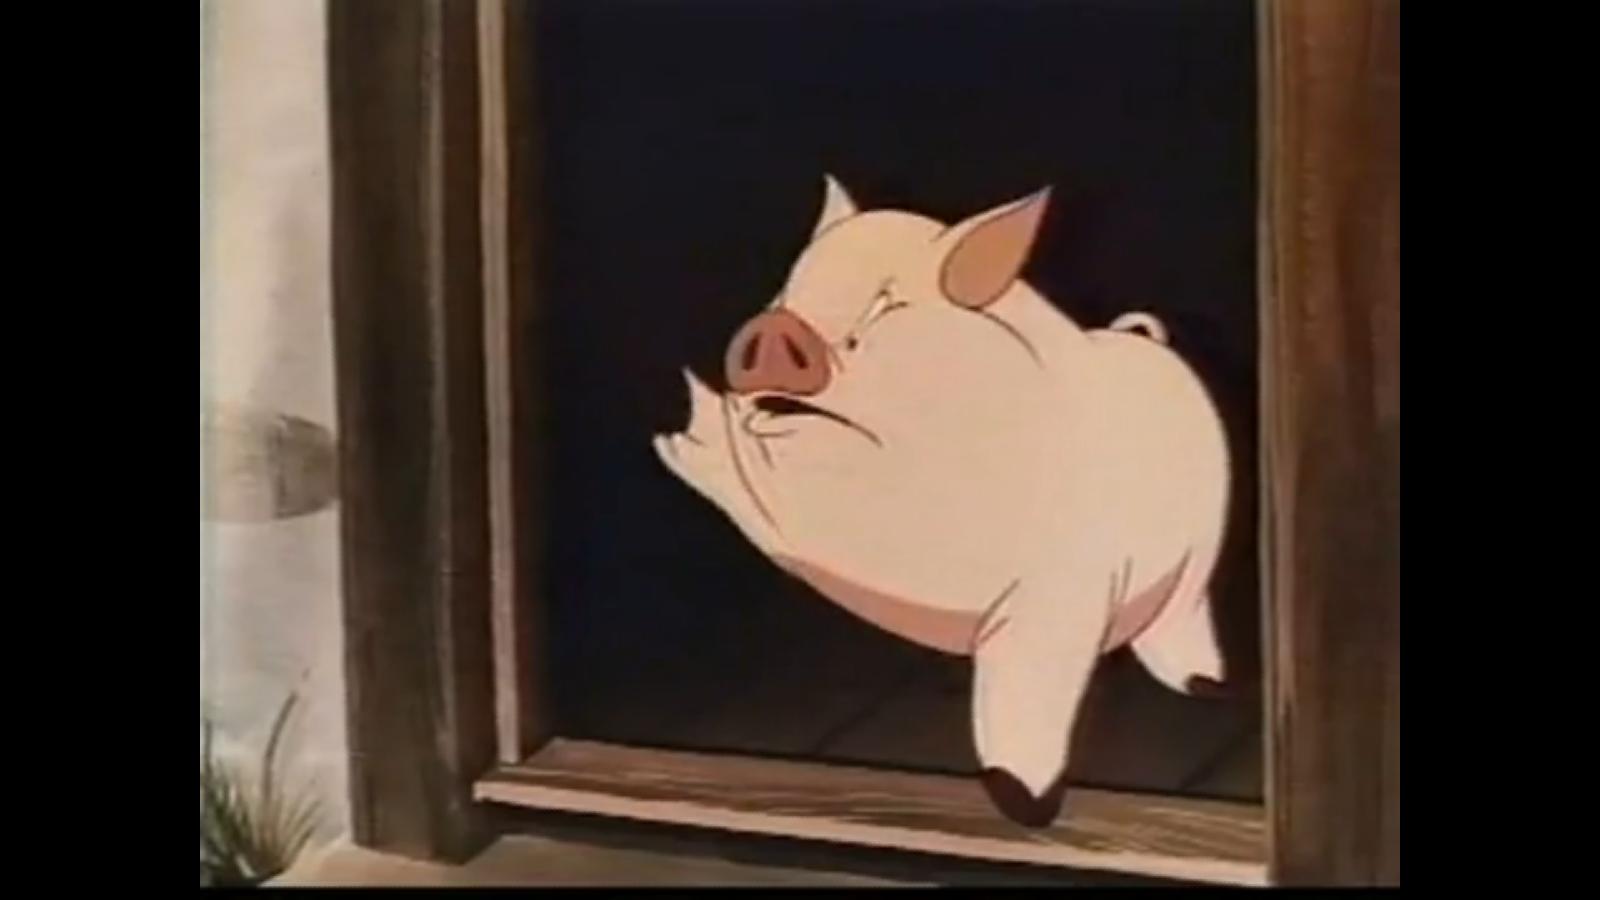 Pigs in animal farm essay